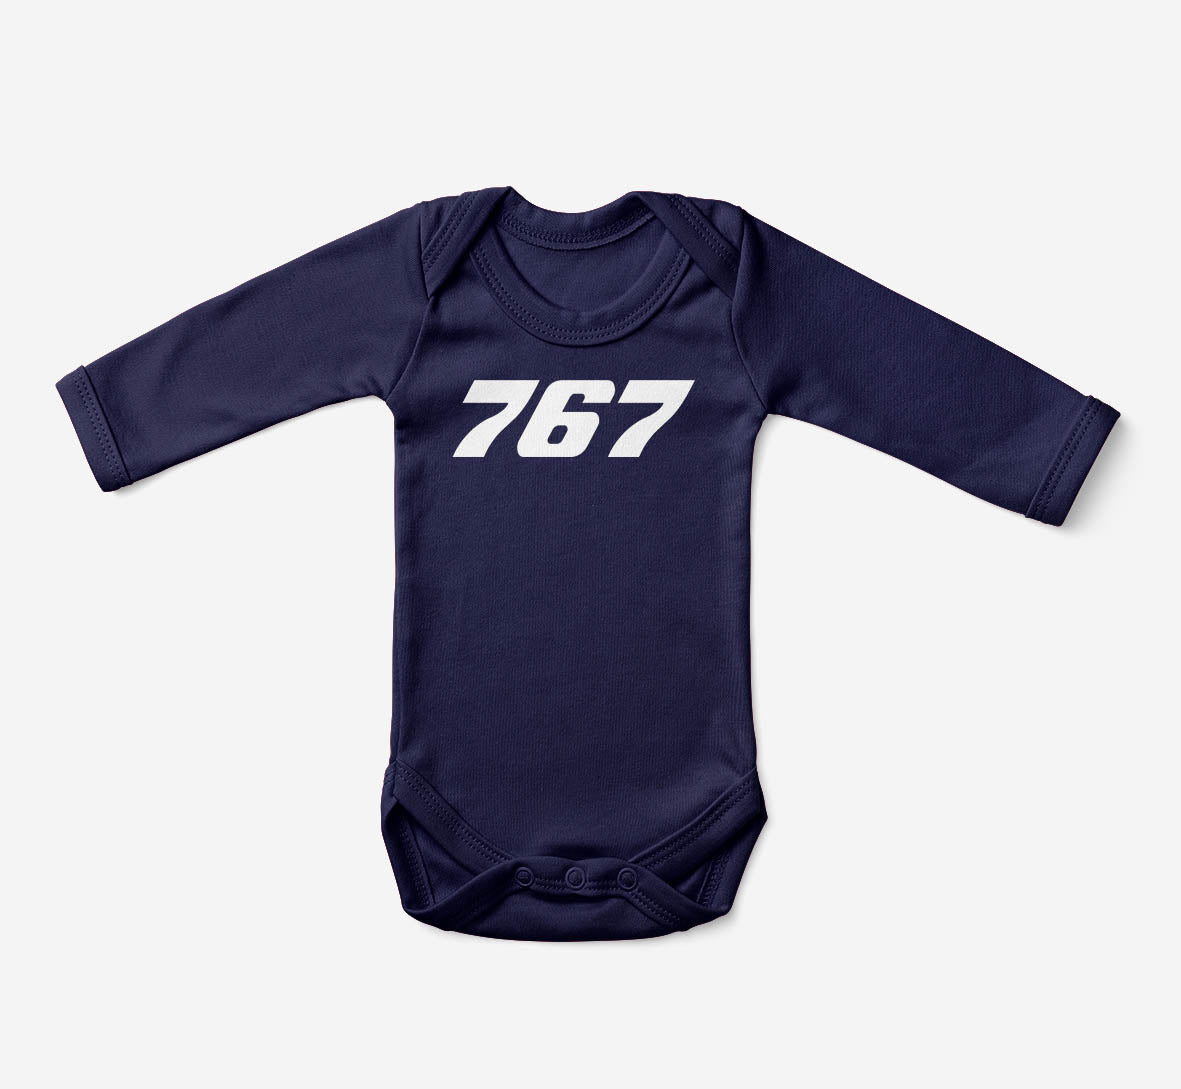 767 Flat Text Designed Baby Bodysuits